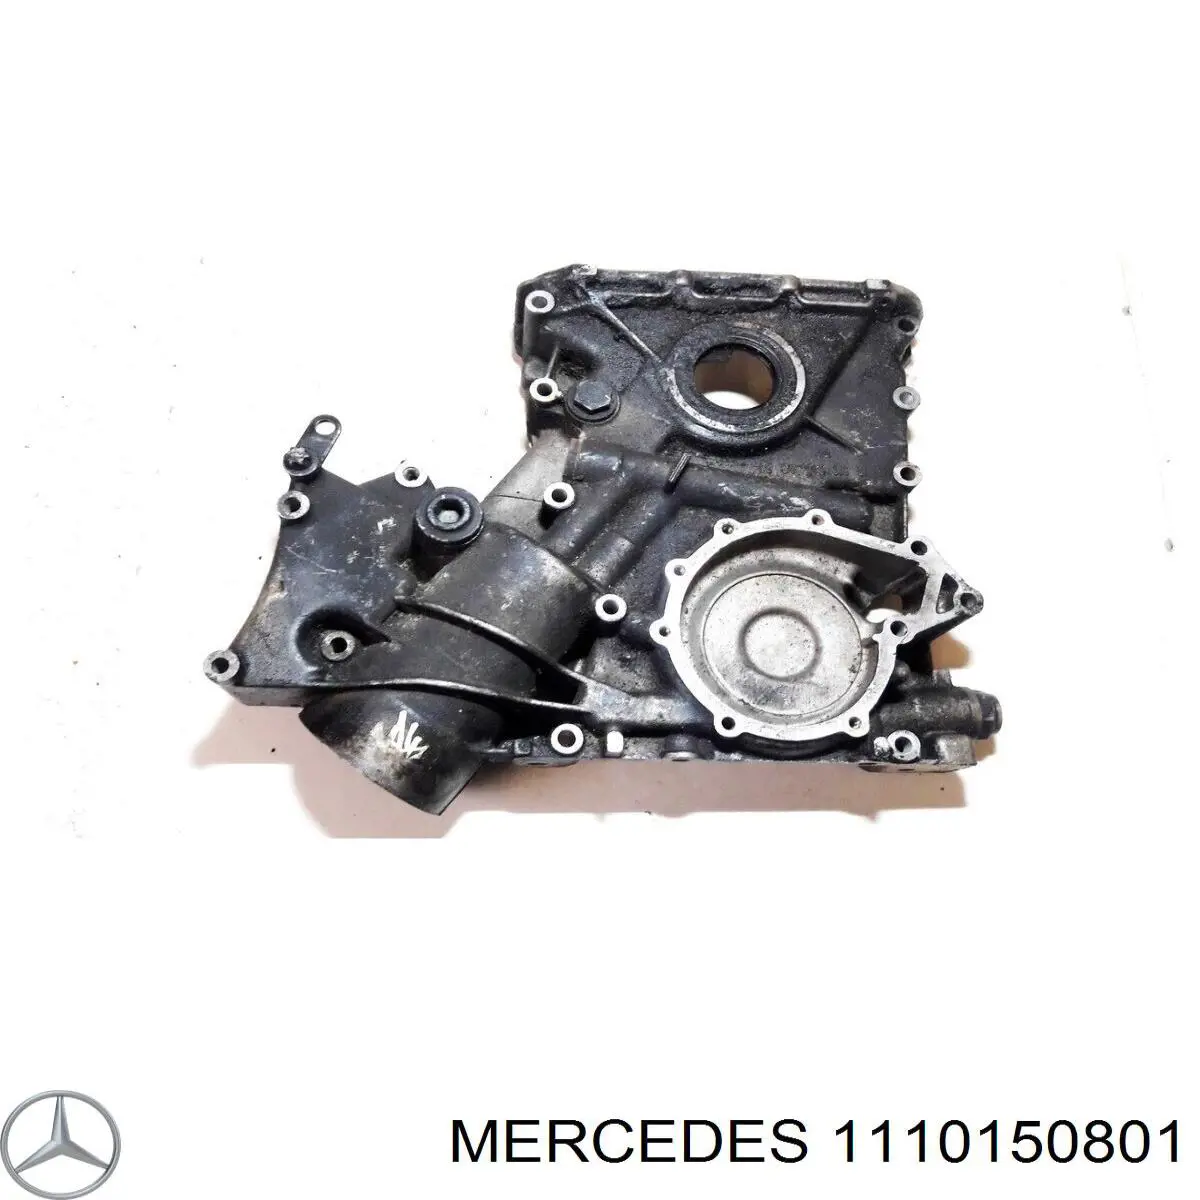 A1110101217 Mercedes cubierta motor delantera